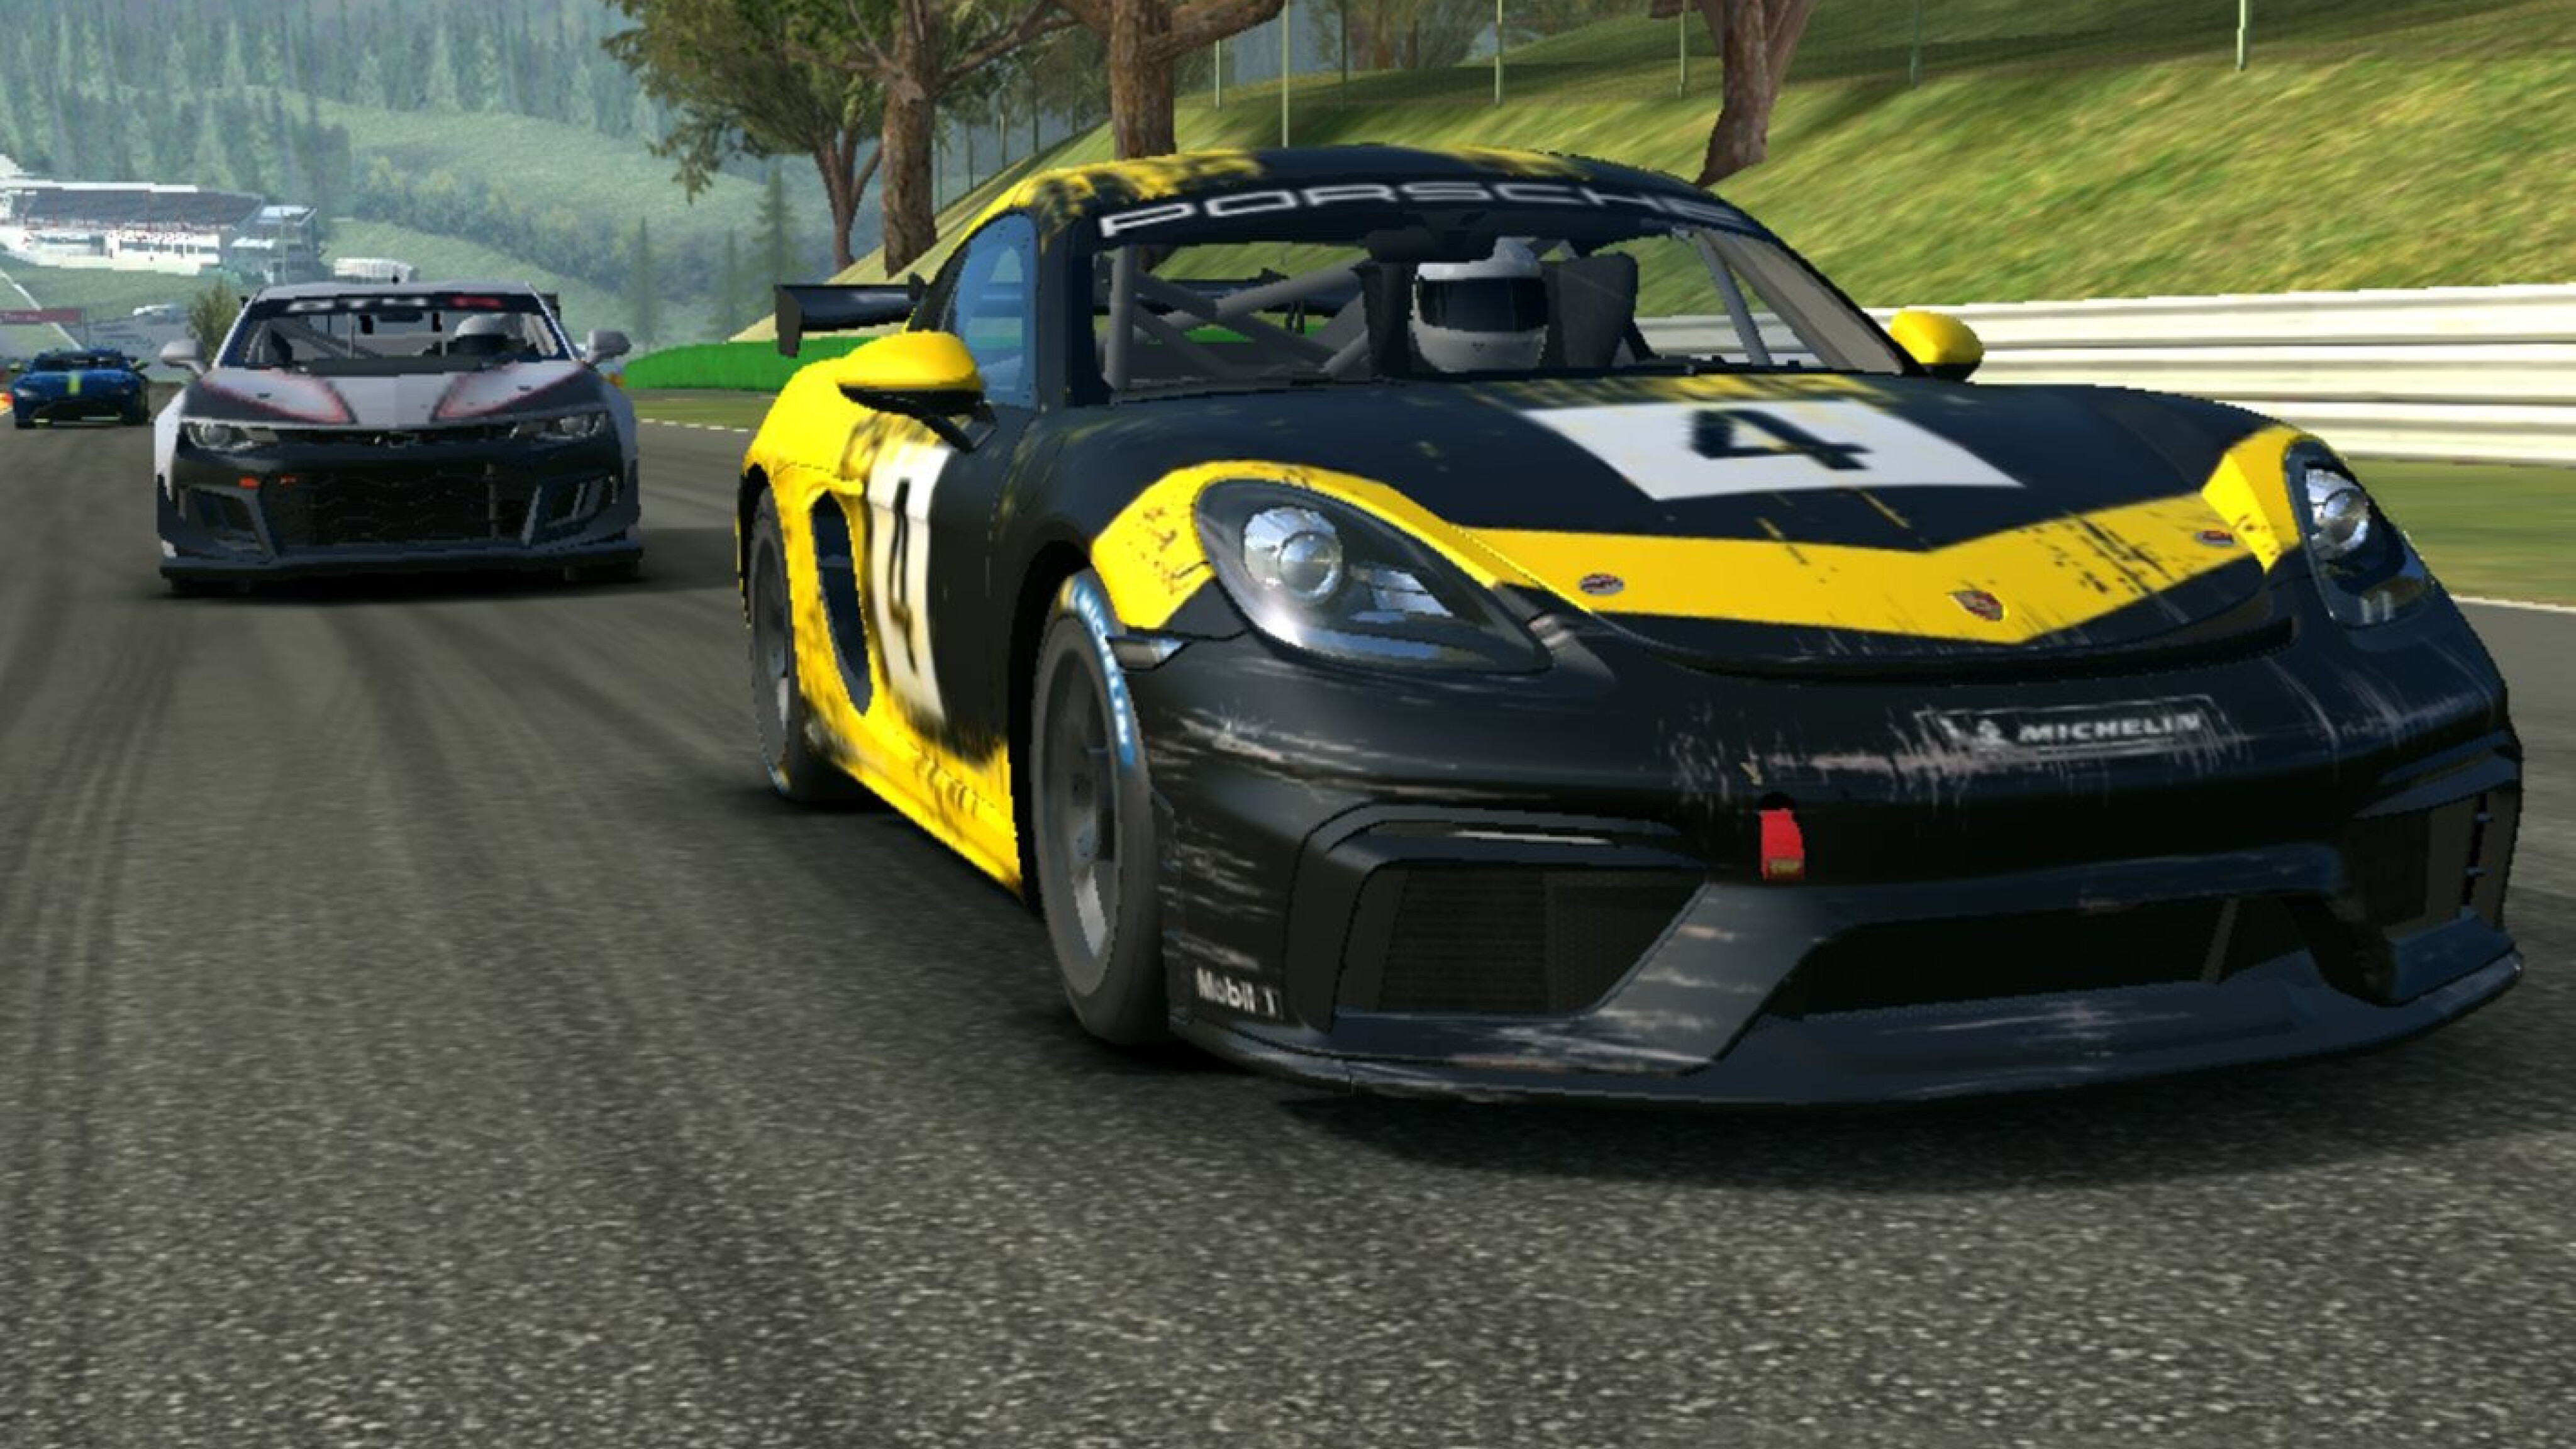 PS2 Racing Games, Supercar Street Challenge, Ford Racing 3, Gran Turismo 4